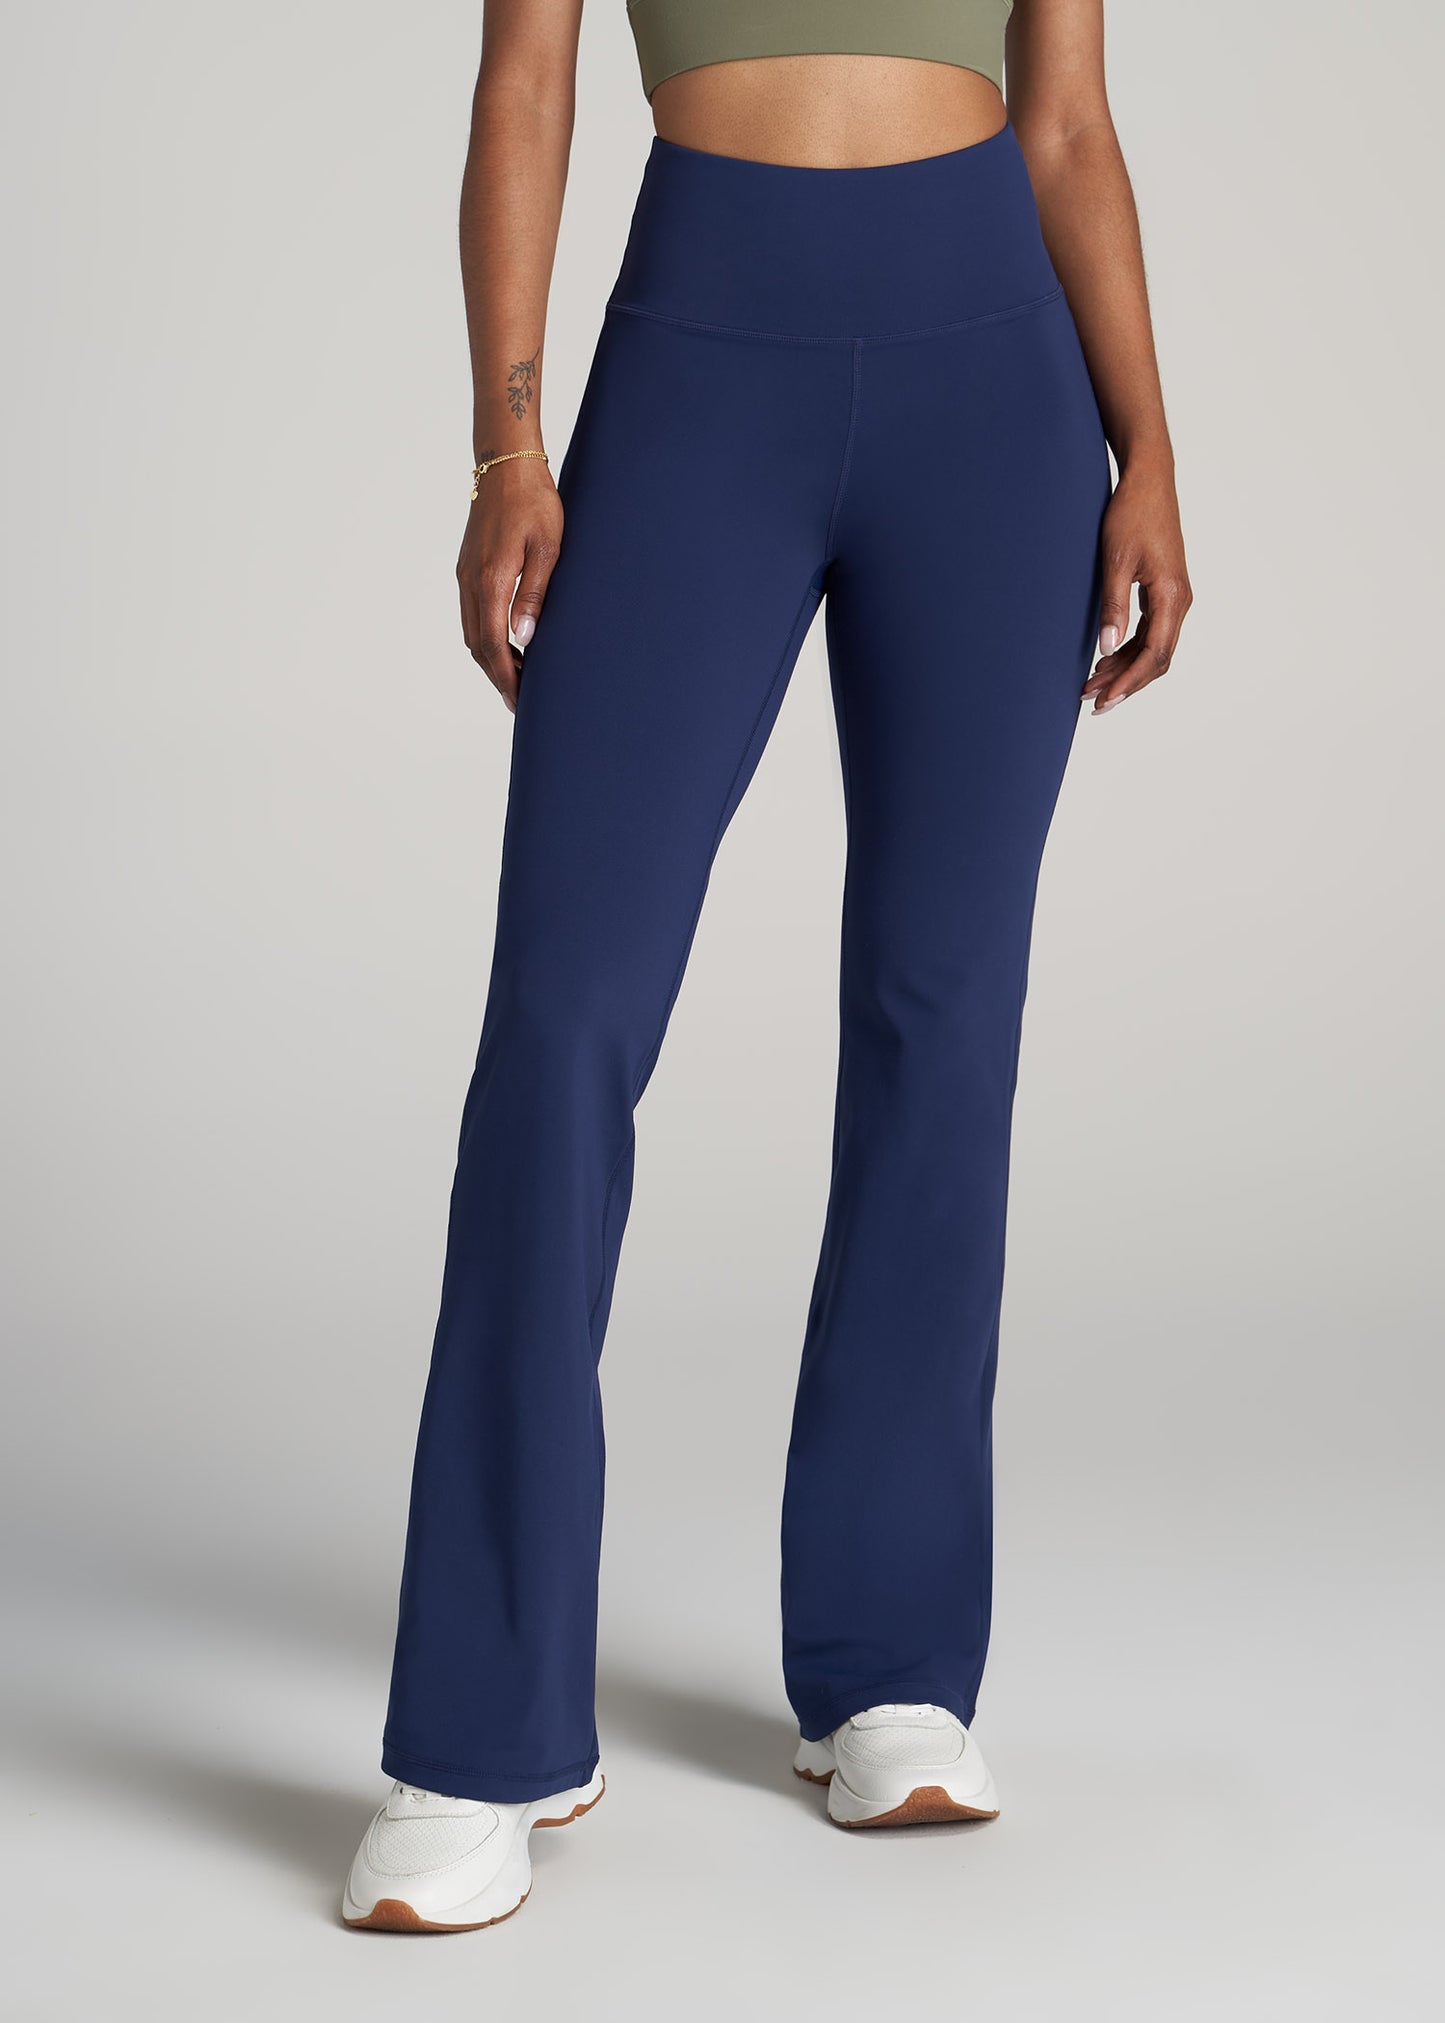 Buy Macrowoman W Women's Yoga Pants (S, Marina Blue) at